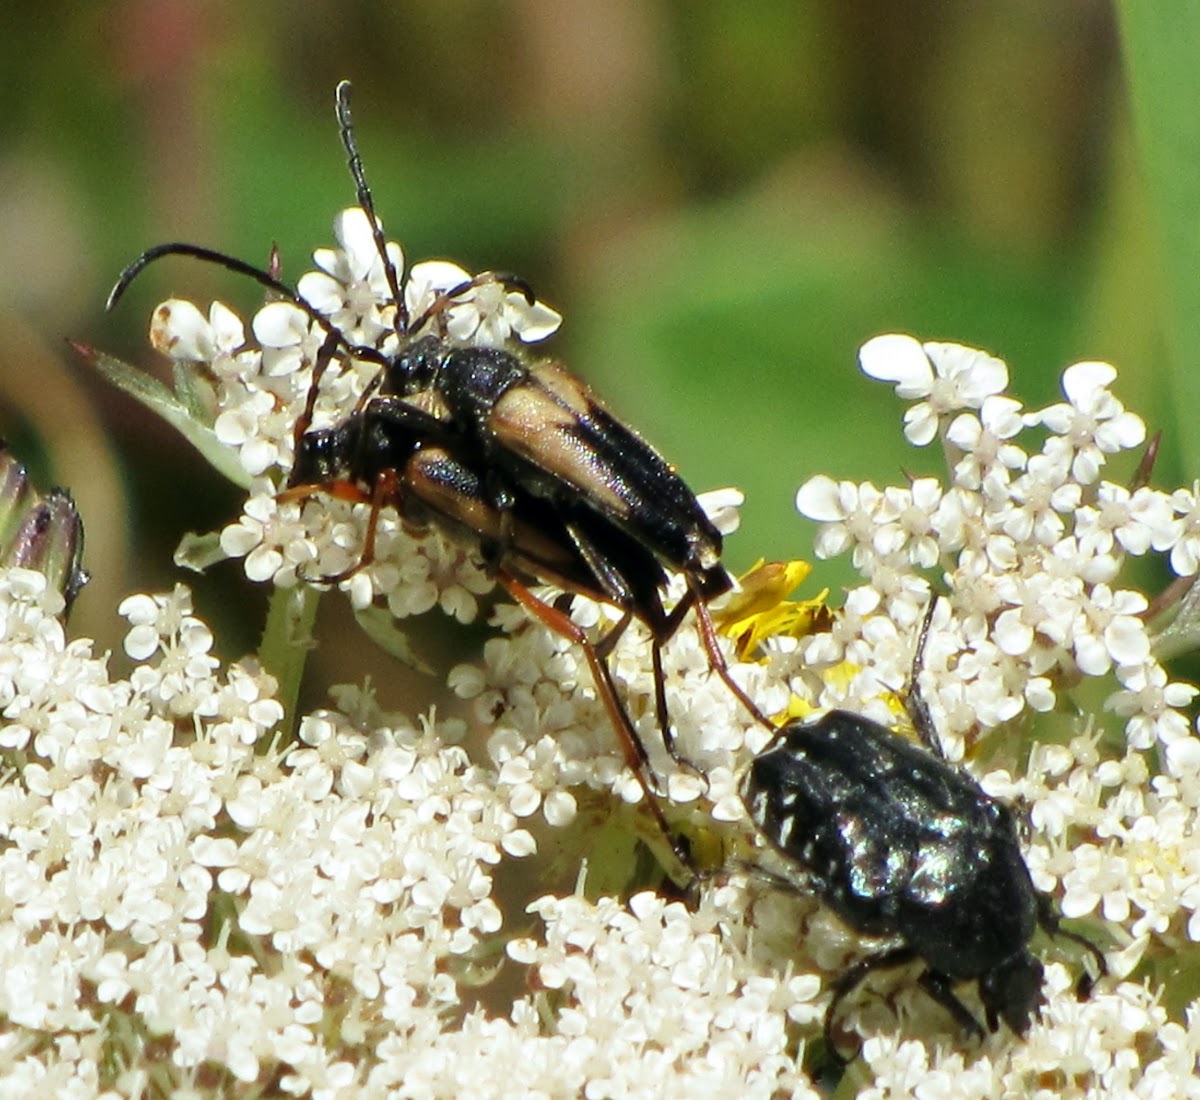 Beetles mating